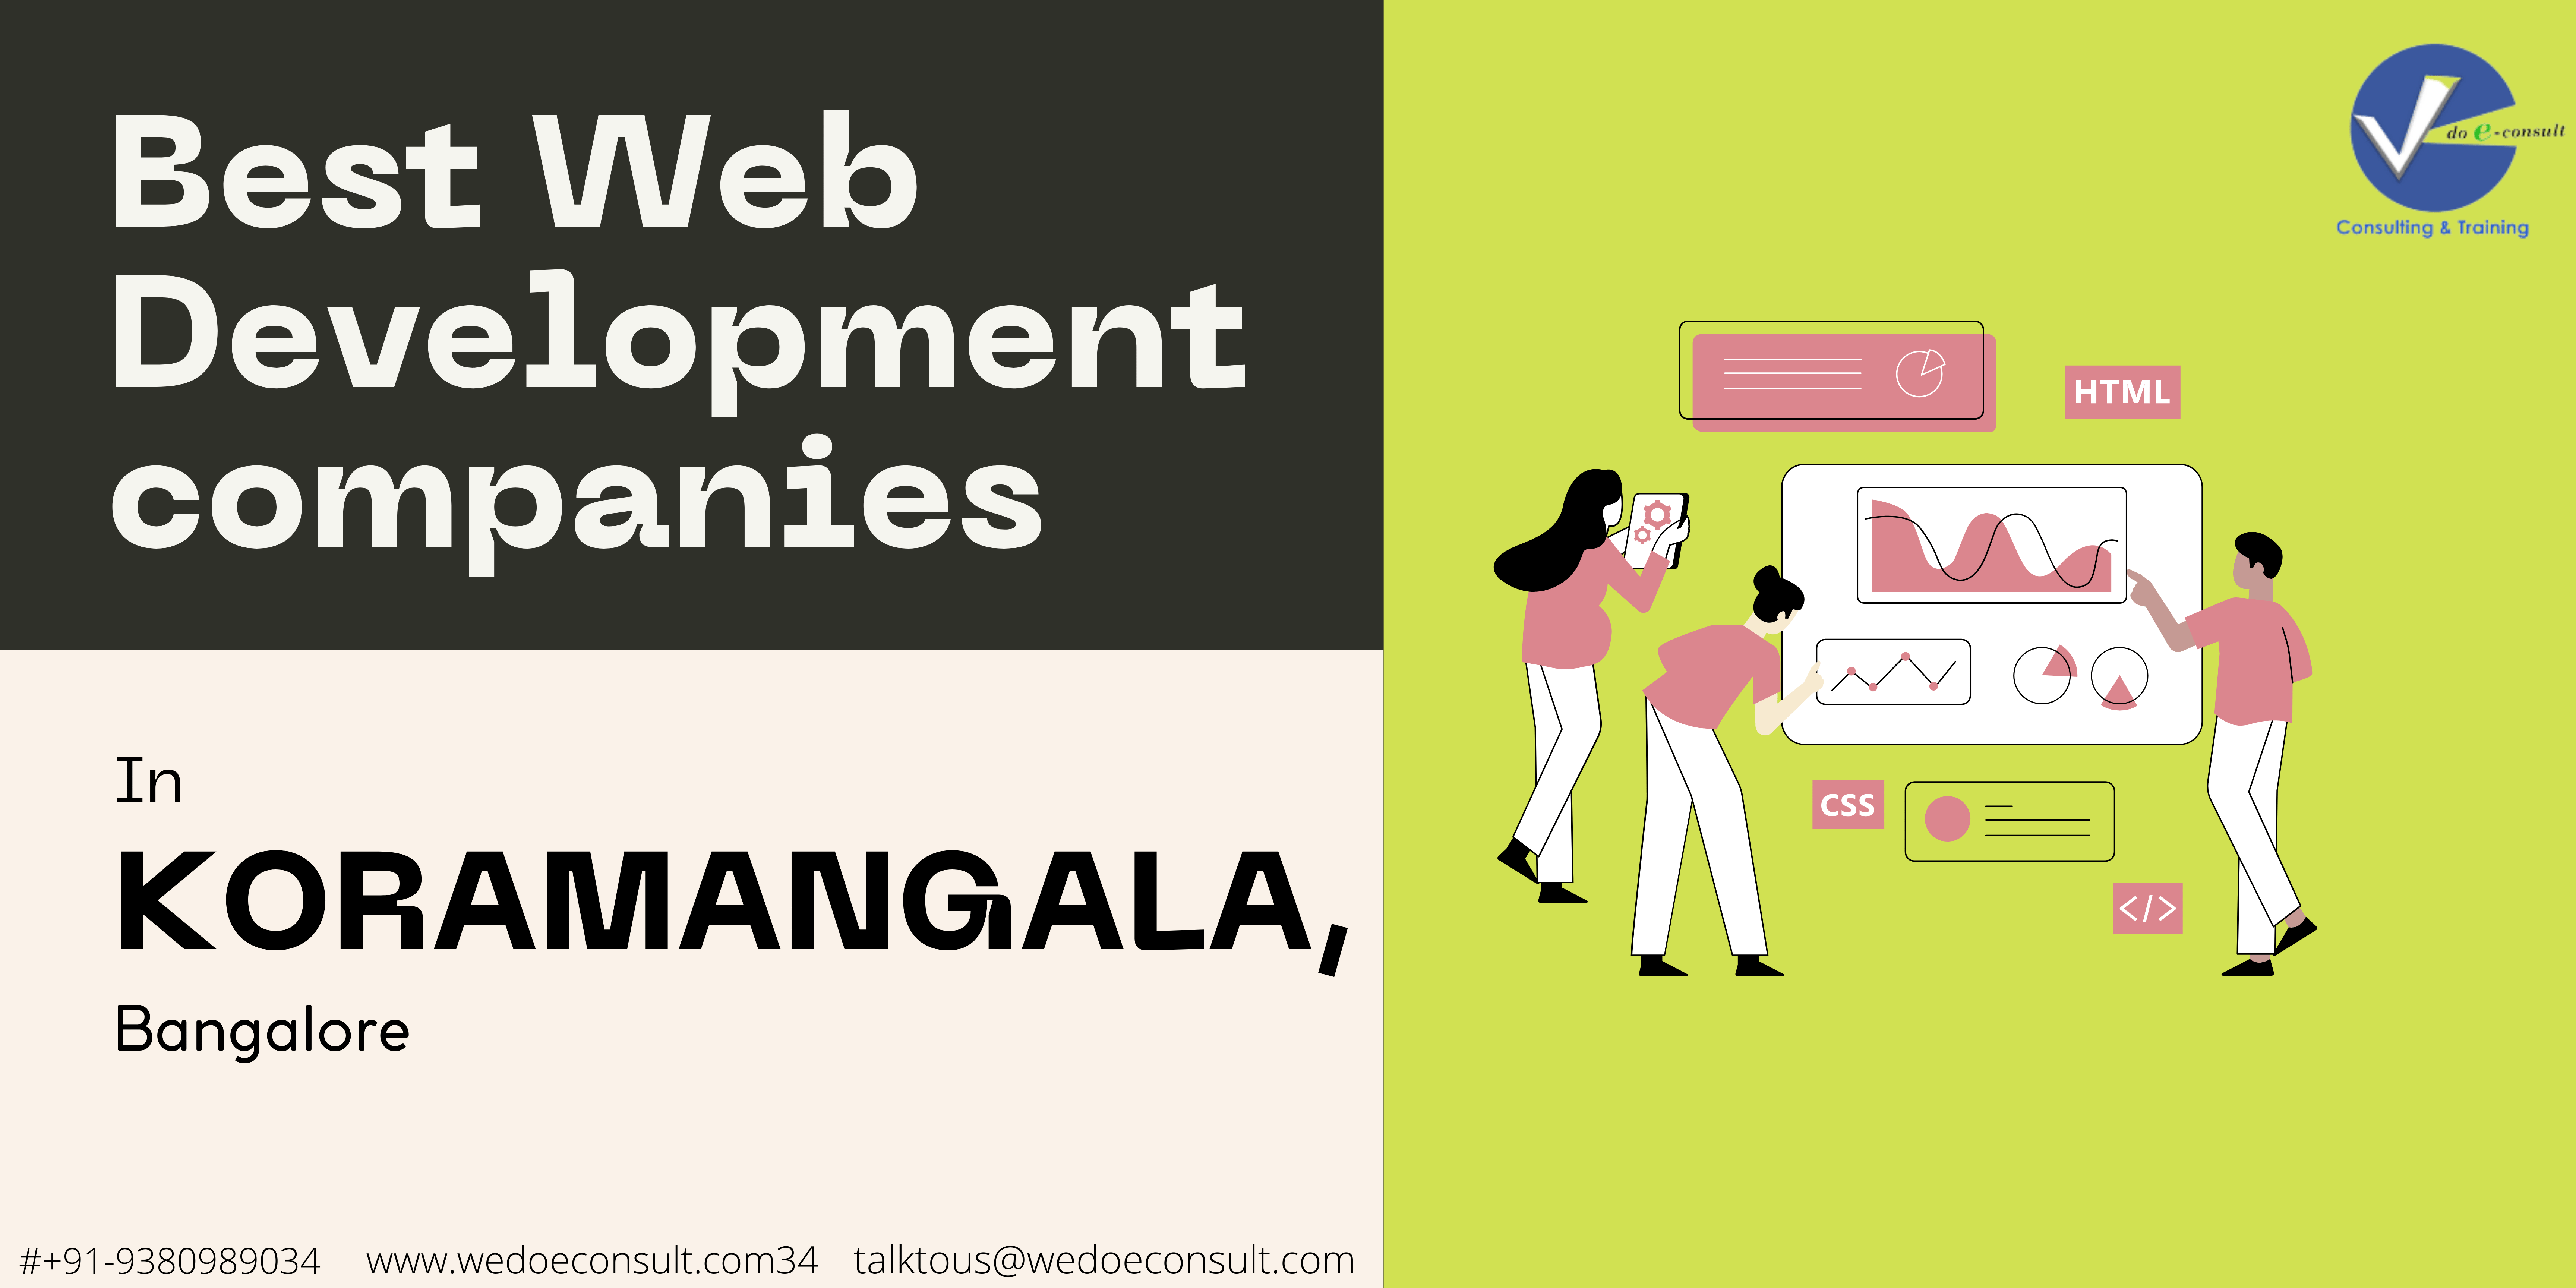 Best Web Development Companies in Koramangala